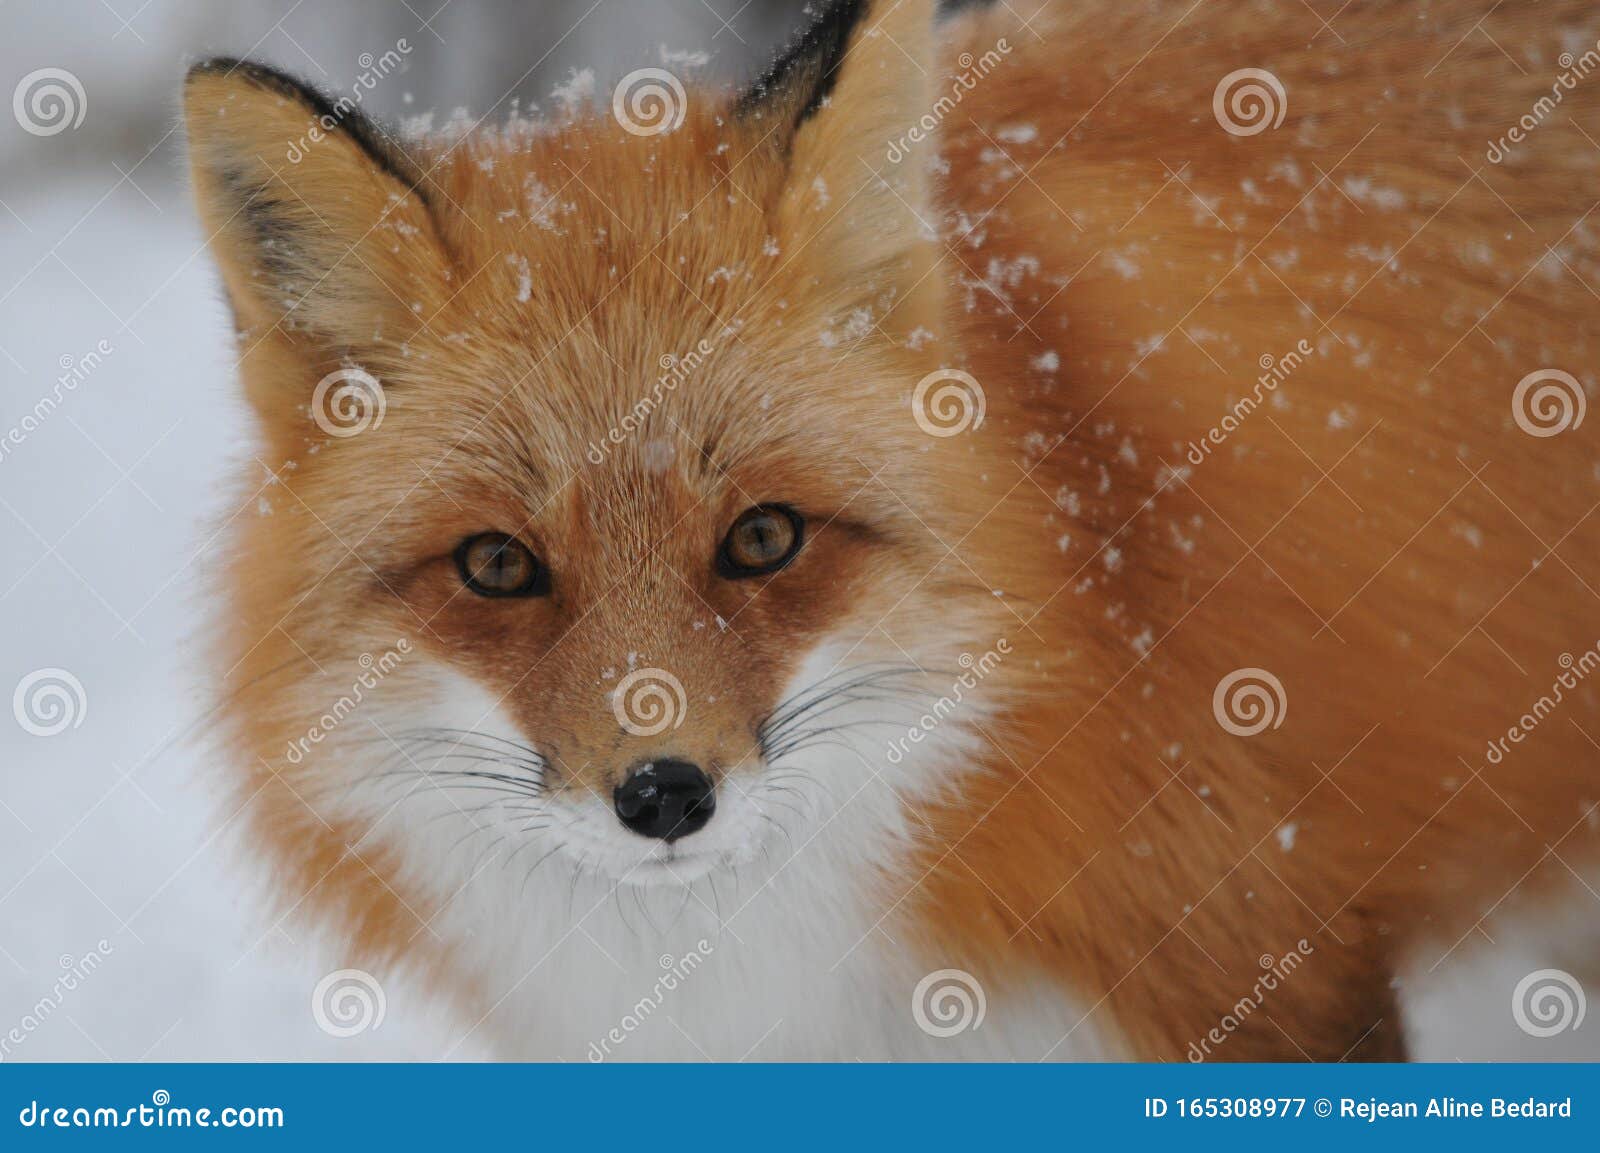 https://thumbs.dreamstime.com/z/fox-red-fox-animalstock-photo-fox-red-fox-animal-head-close-up-profile-view-winter-season-red-fox-head-close-up-profile-fox-165308977.jpg